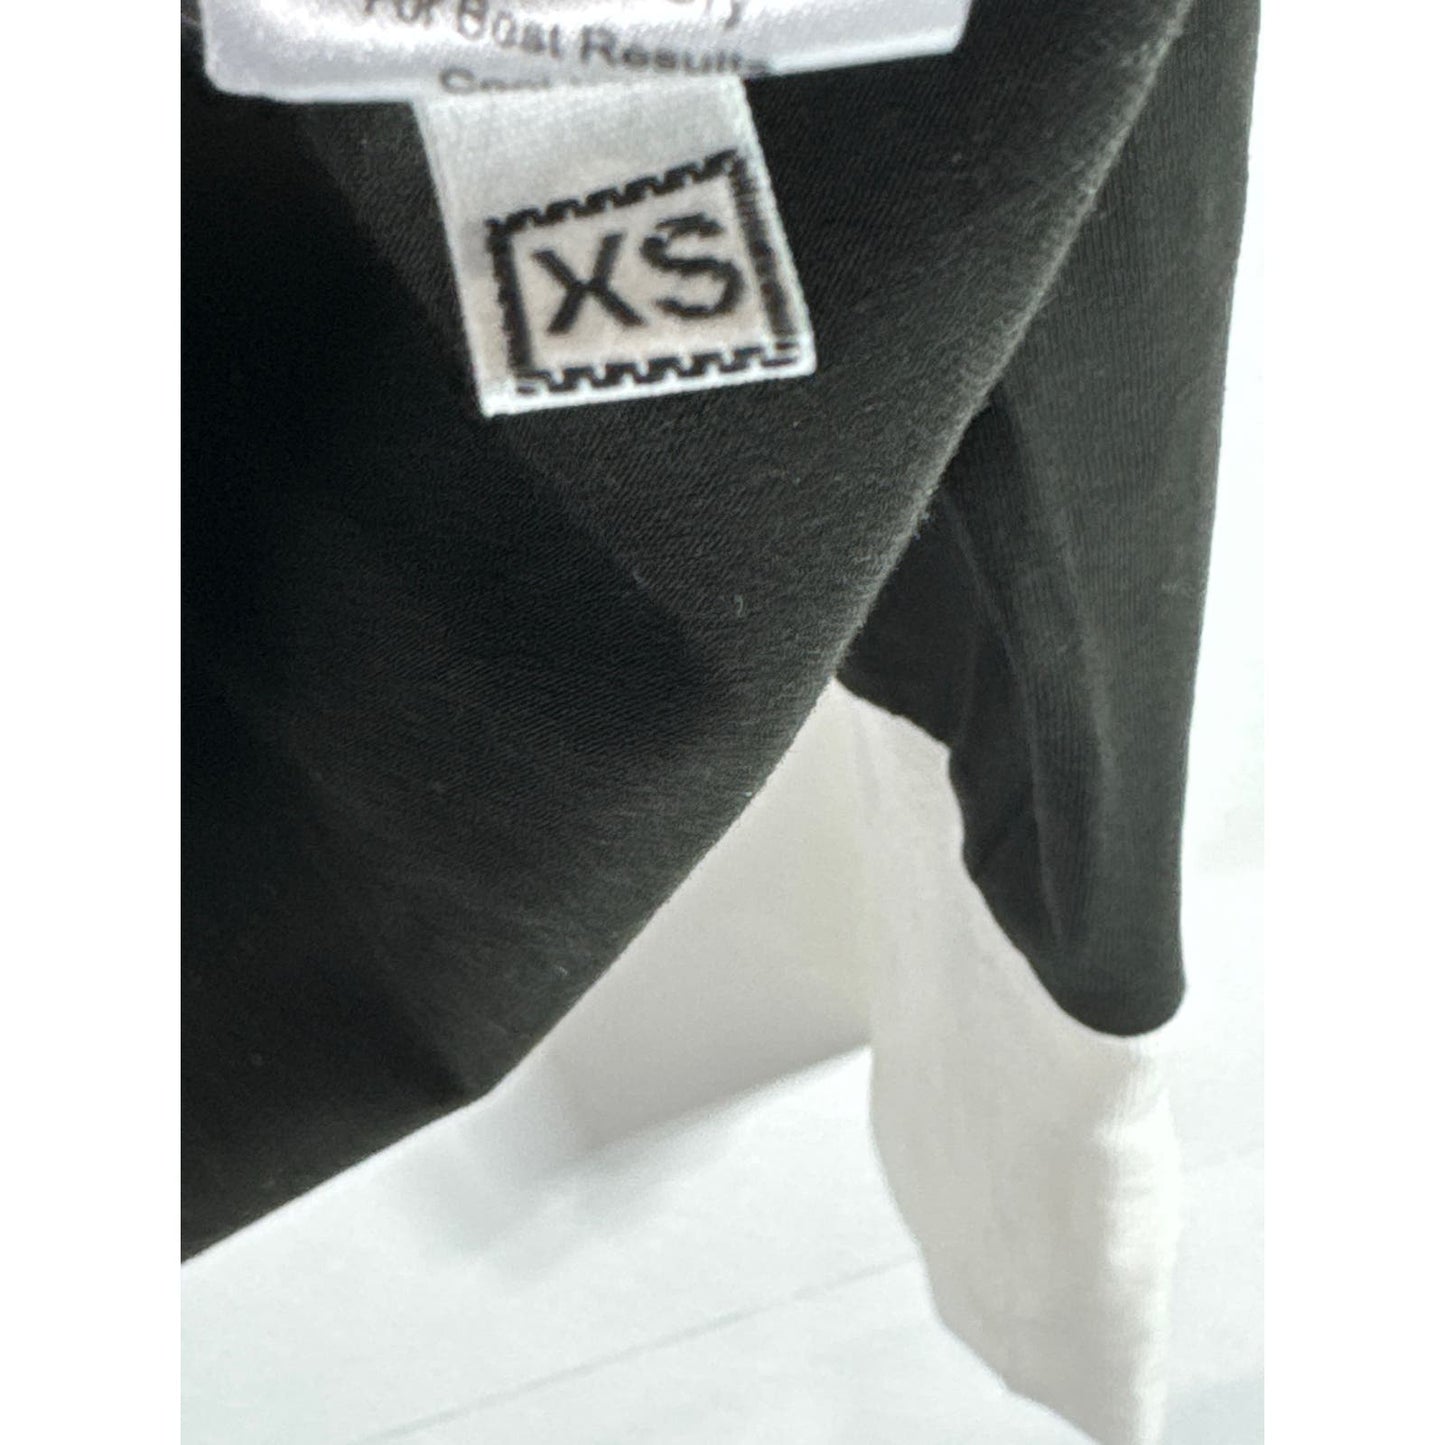 UNIVERSAL STANDARD Women's Black/White Rhine Color --Sleeve Cuff Top SZ XS(US-L)